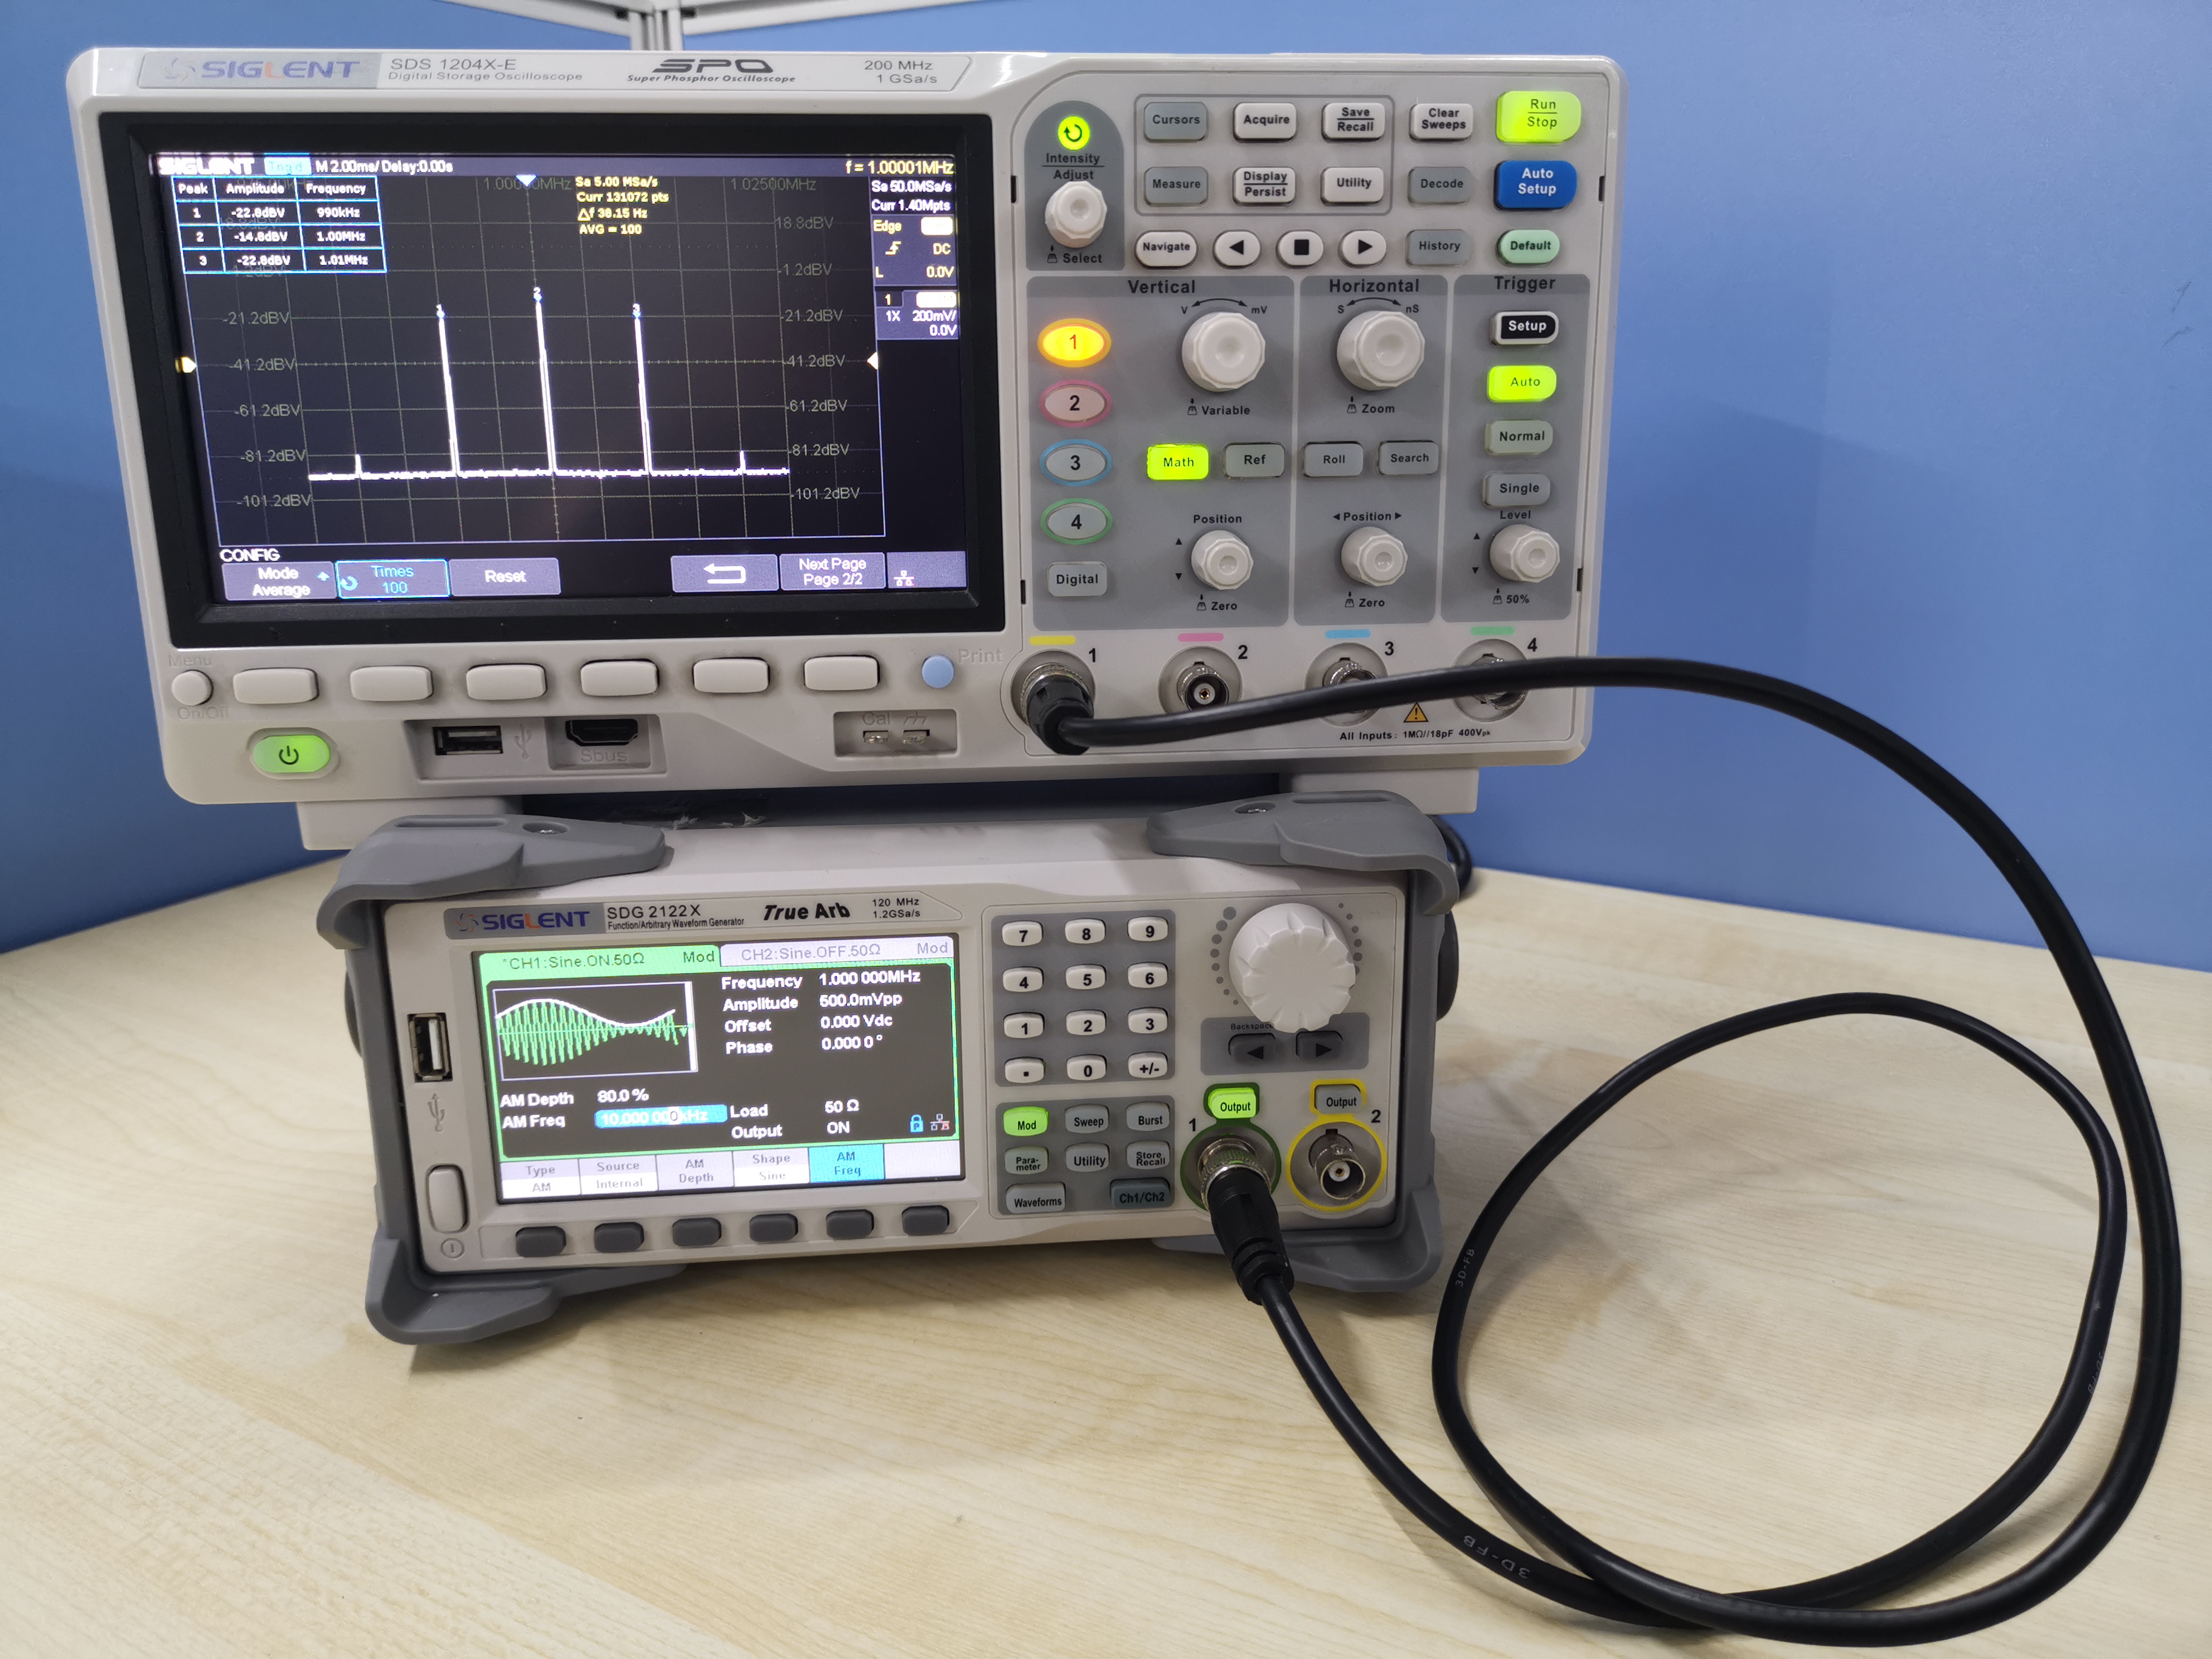 Digital oscilloscope set up for measurement